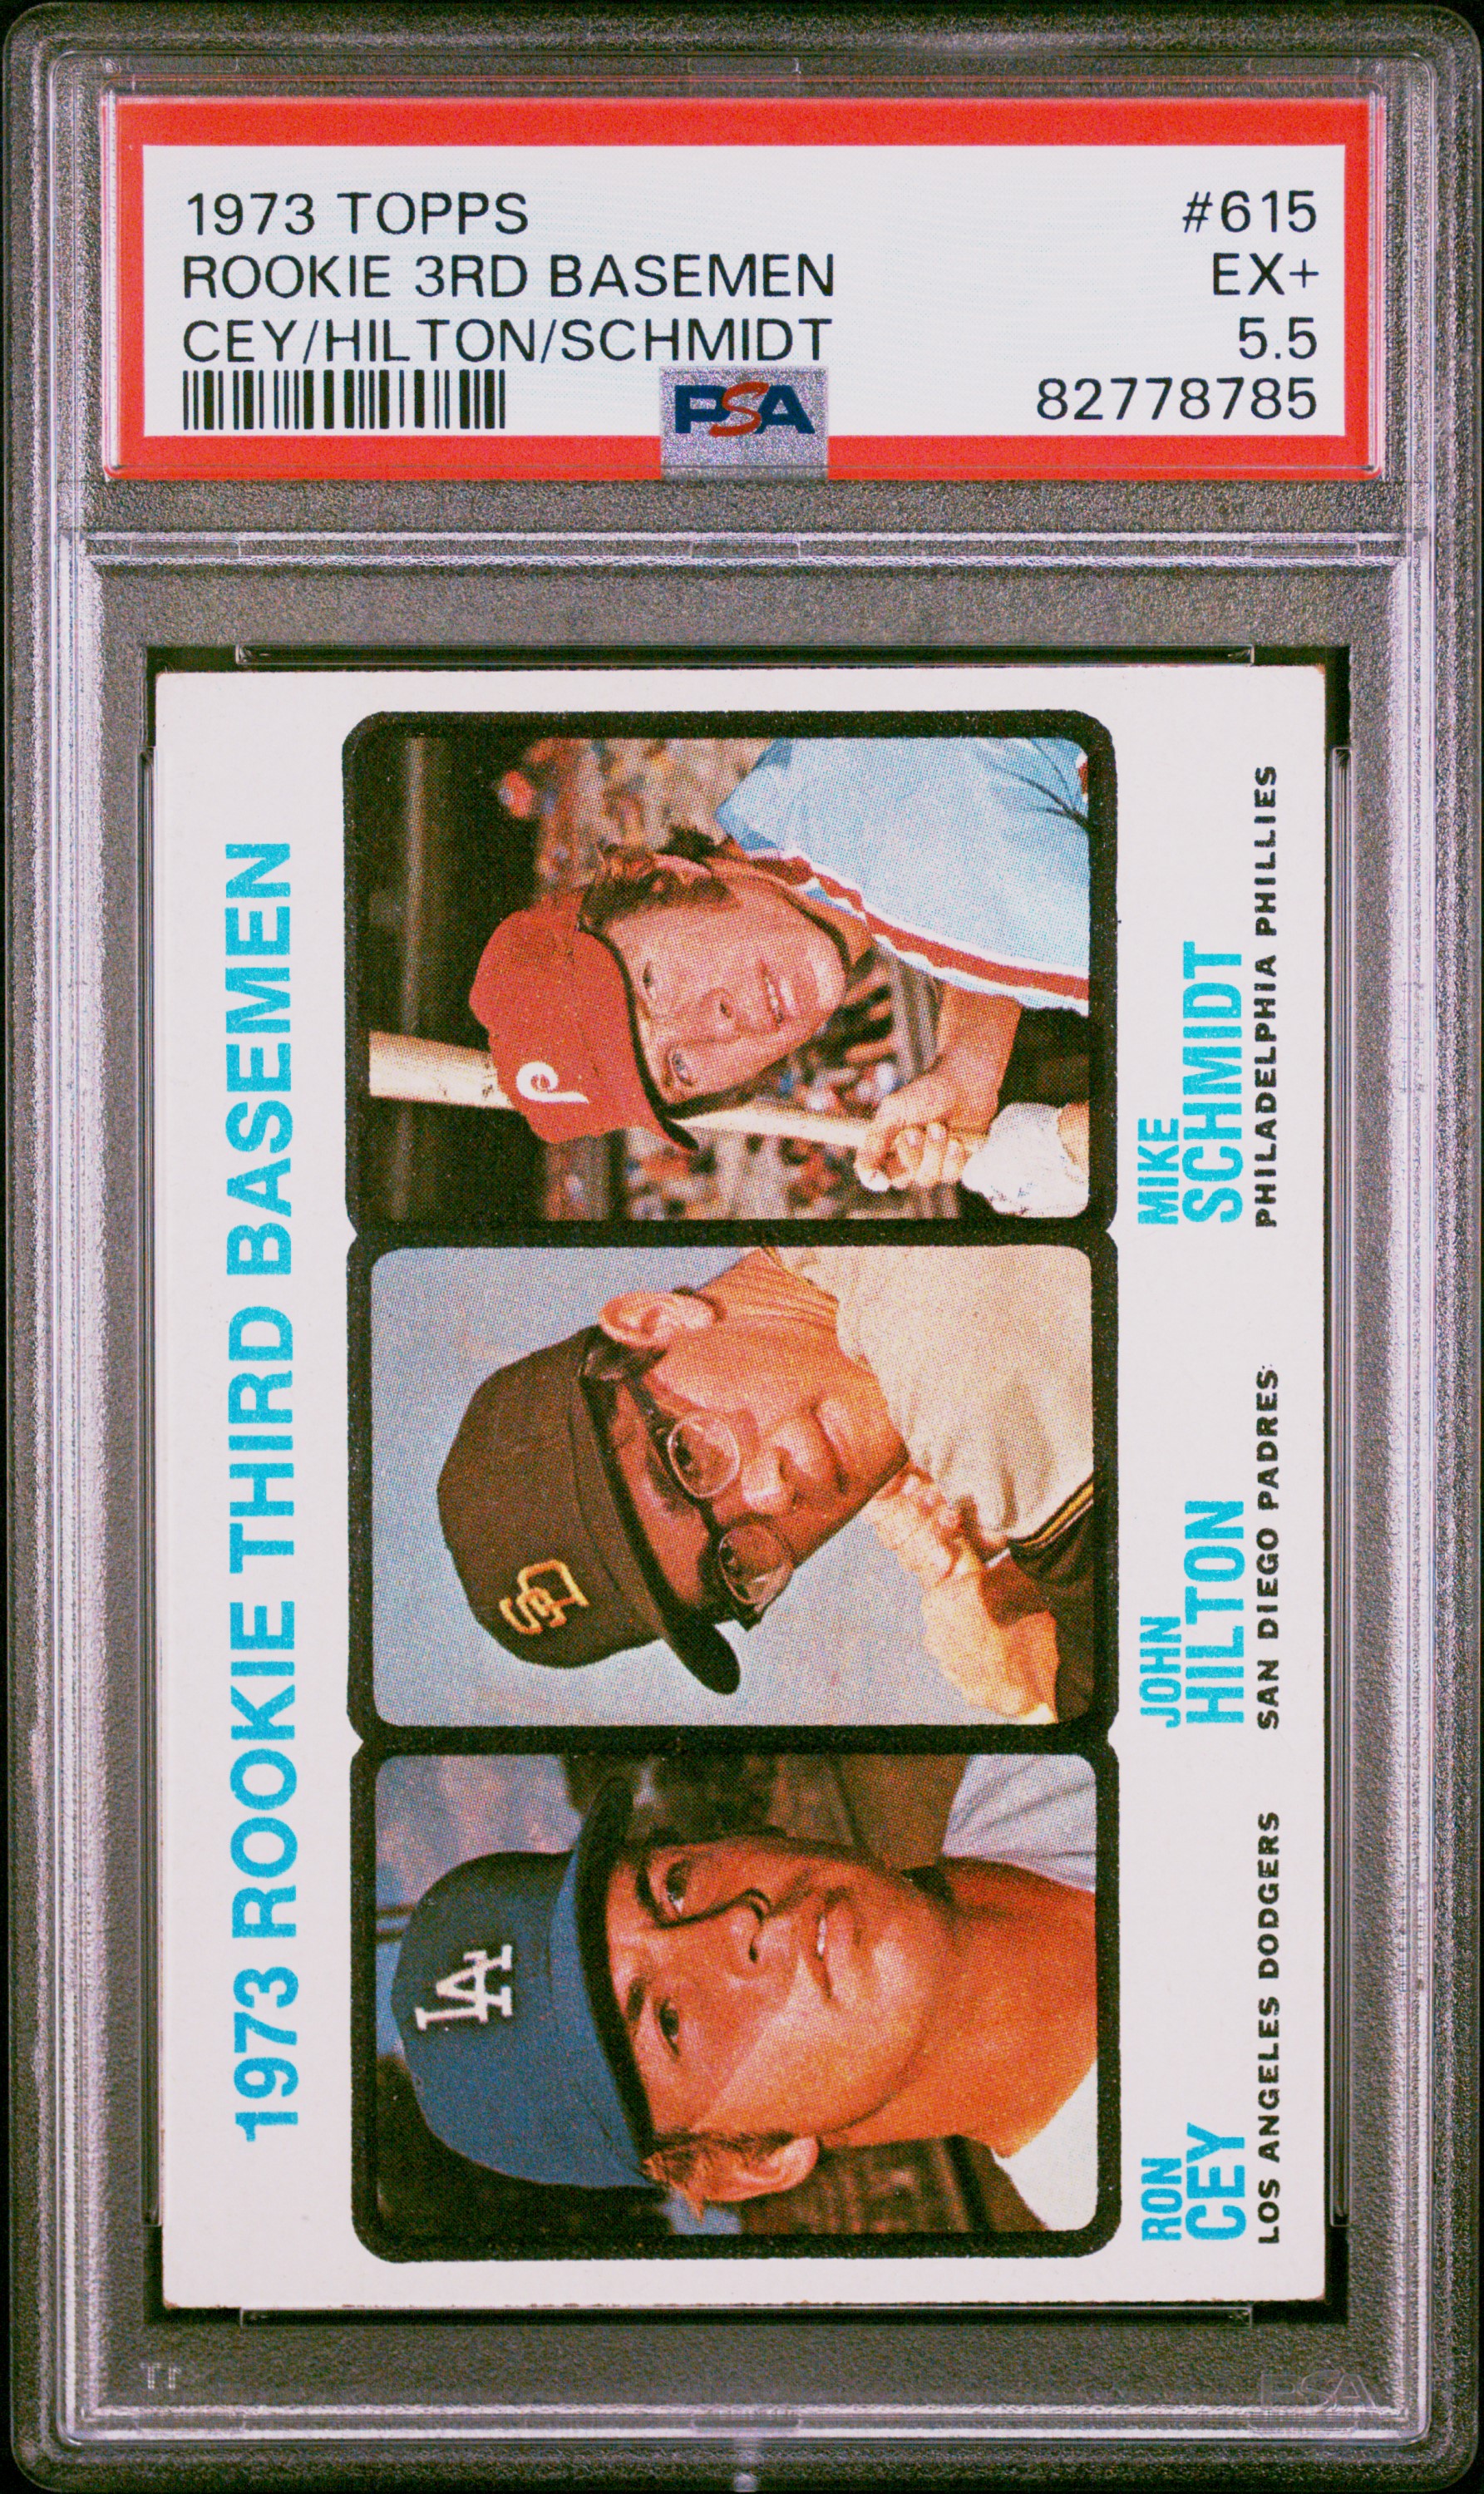 1973 Topps Ron Cey/John Hilton/Mike Schmidt #615 Rookie 3rd Basemen – PSA EX+ 5.5